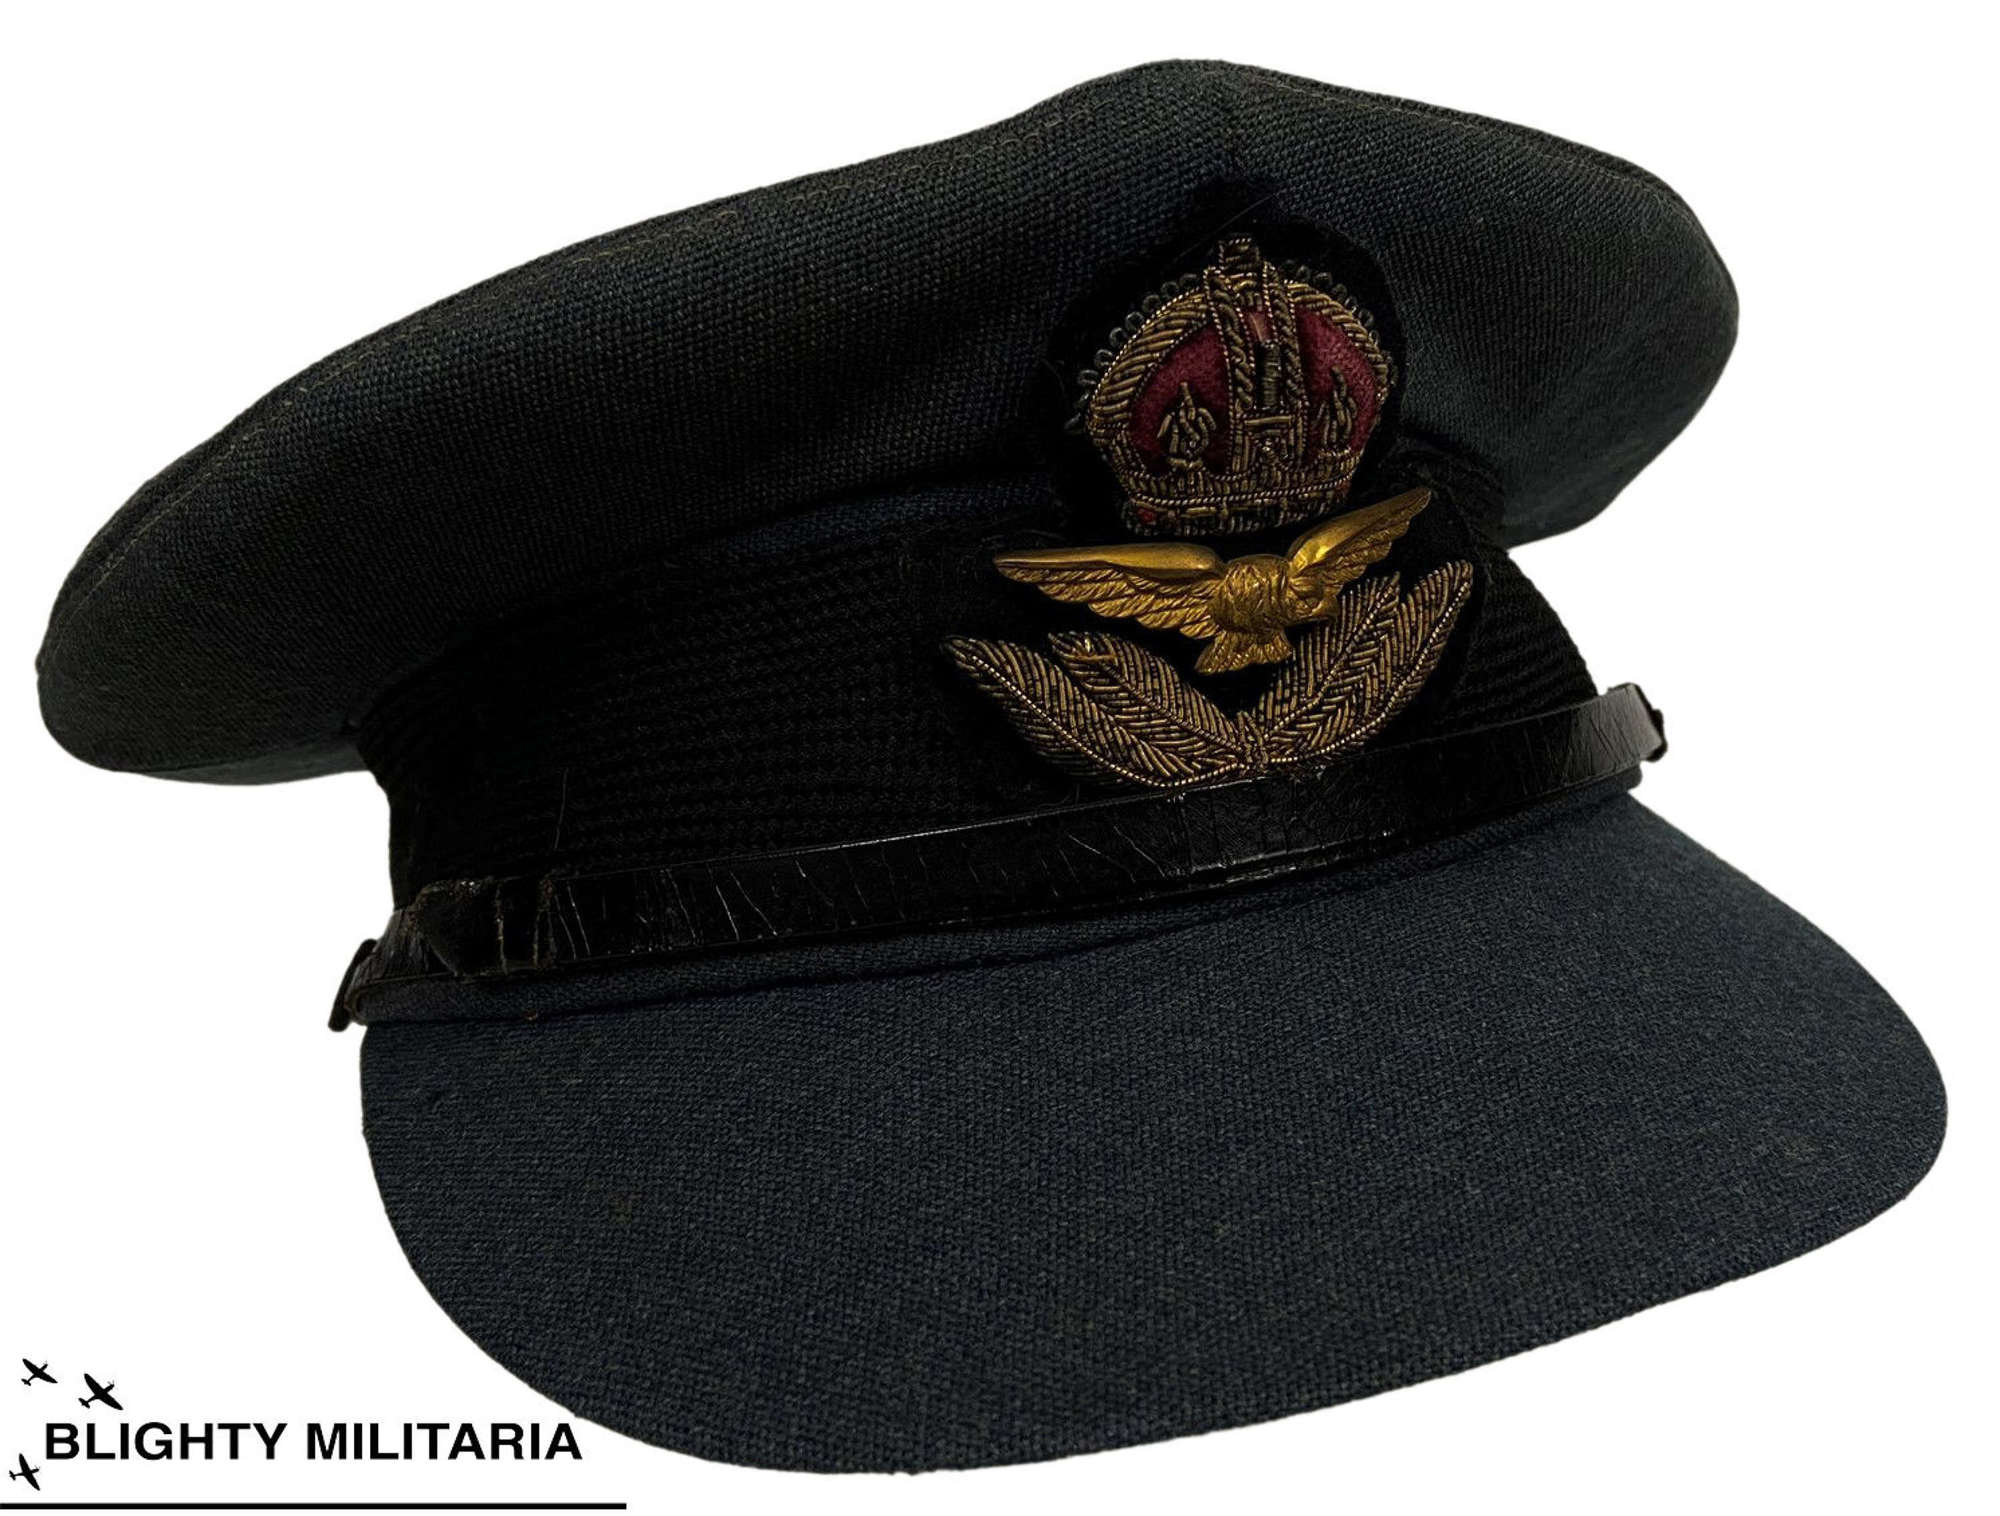 Original WW2 RAF Officers Peaked Cap by 'Burberry'